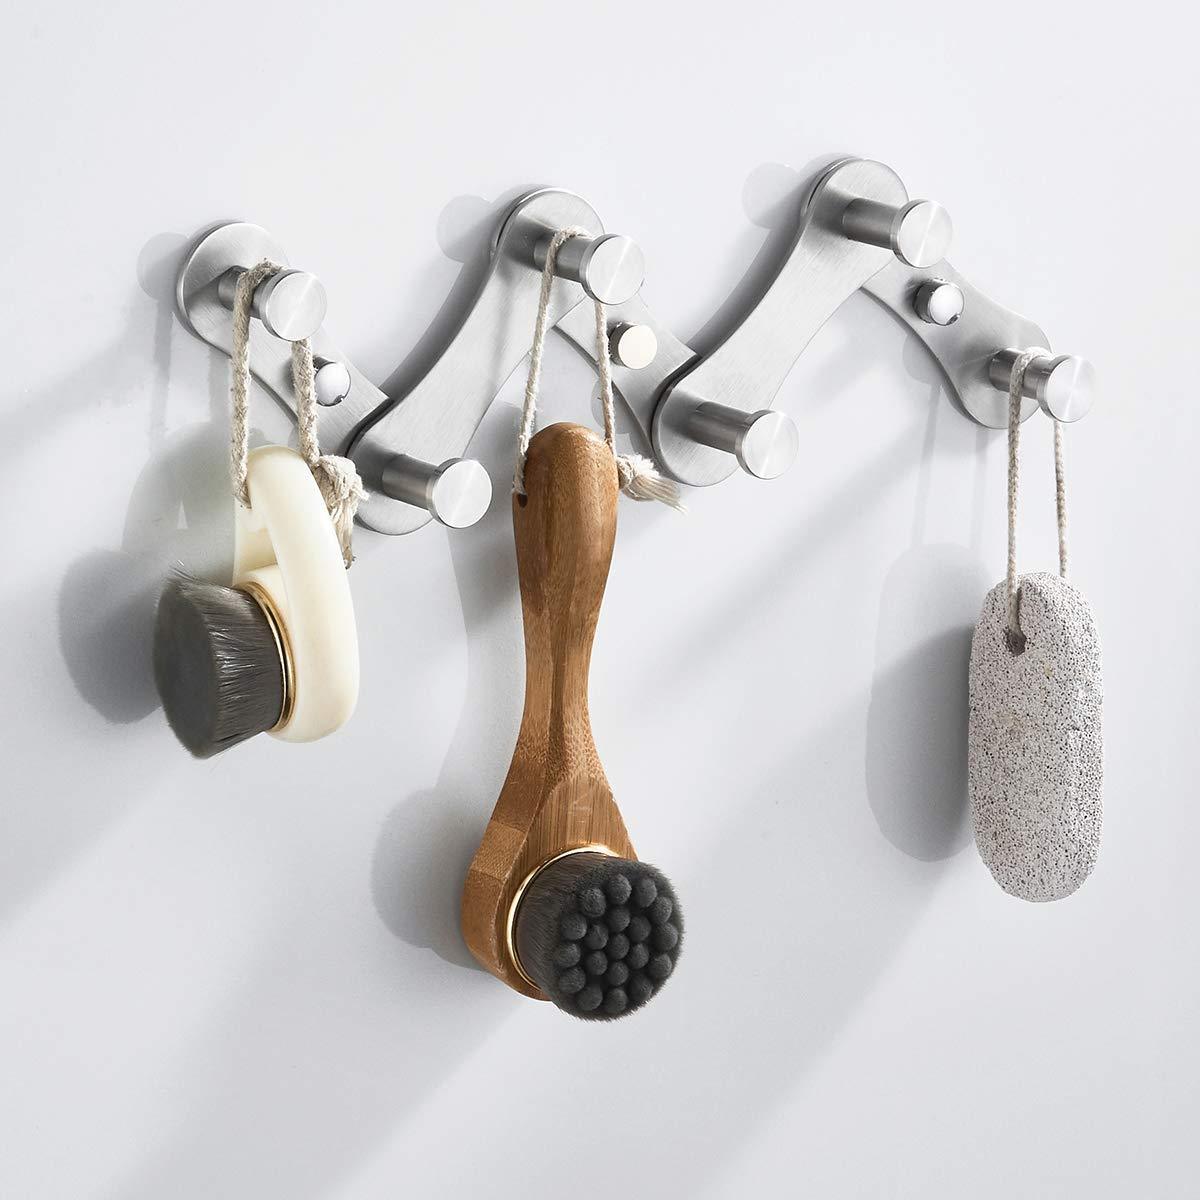 Select nice diy towel hooks wall mounted stainless steel coat hooks for bathroom 6 hooks brushed nickel